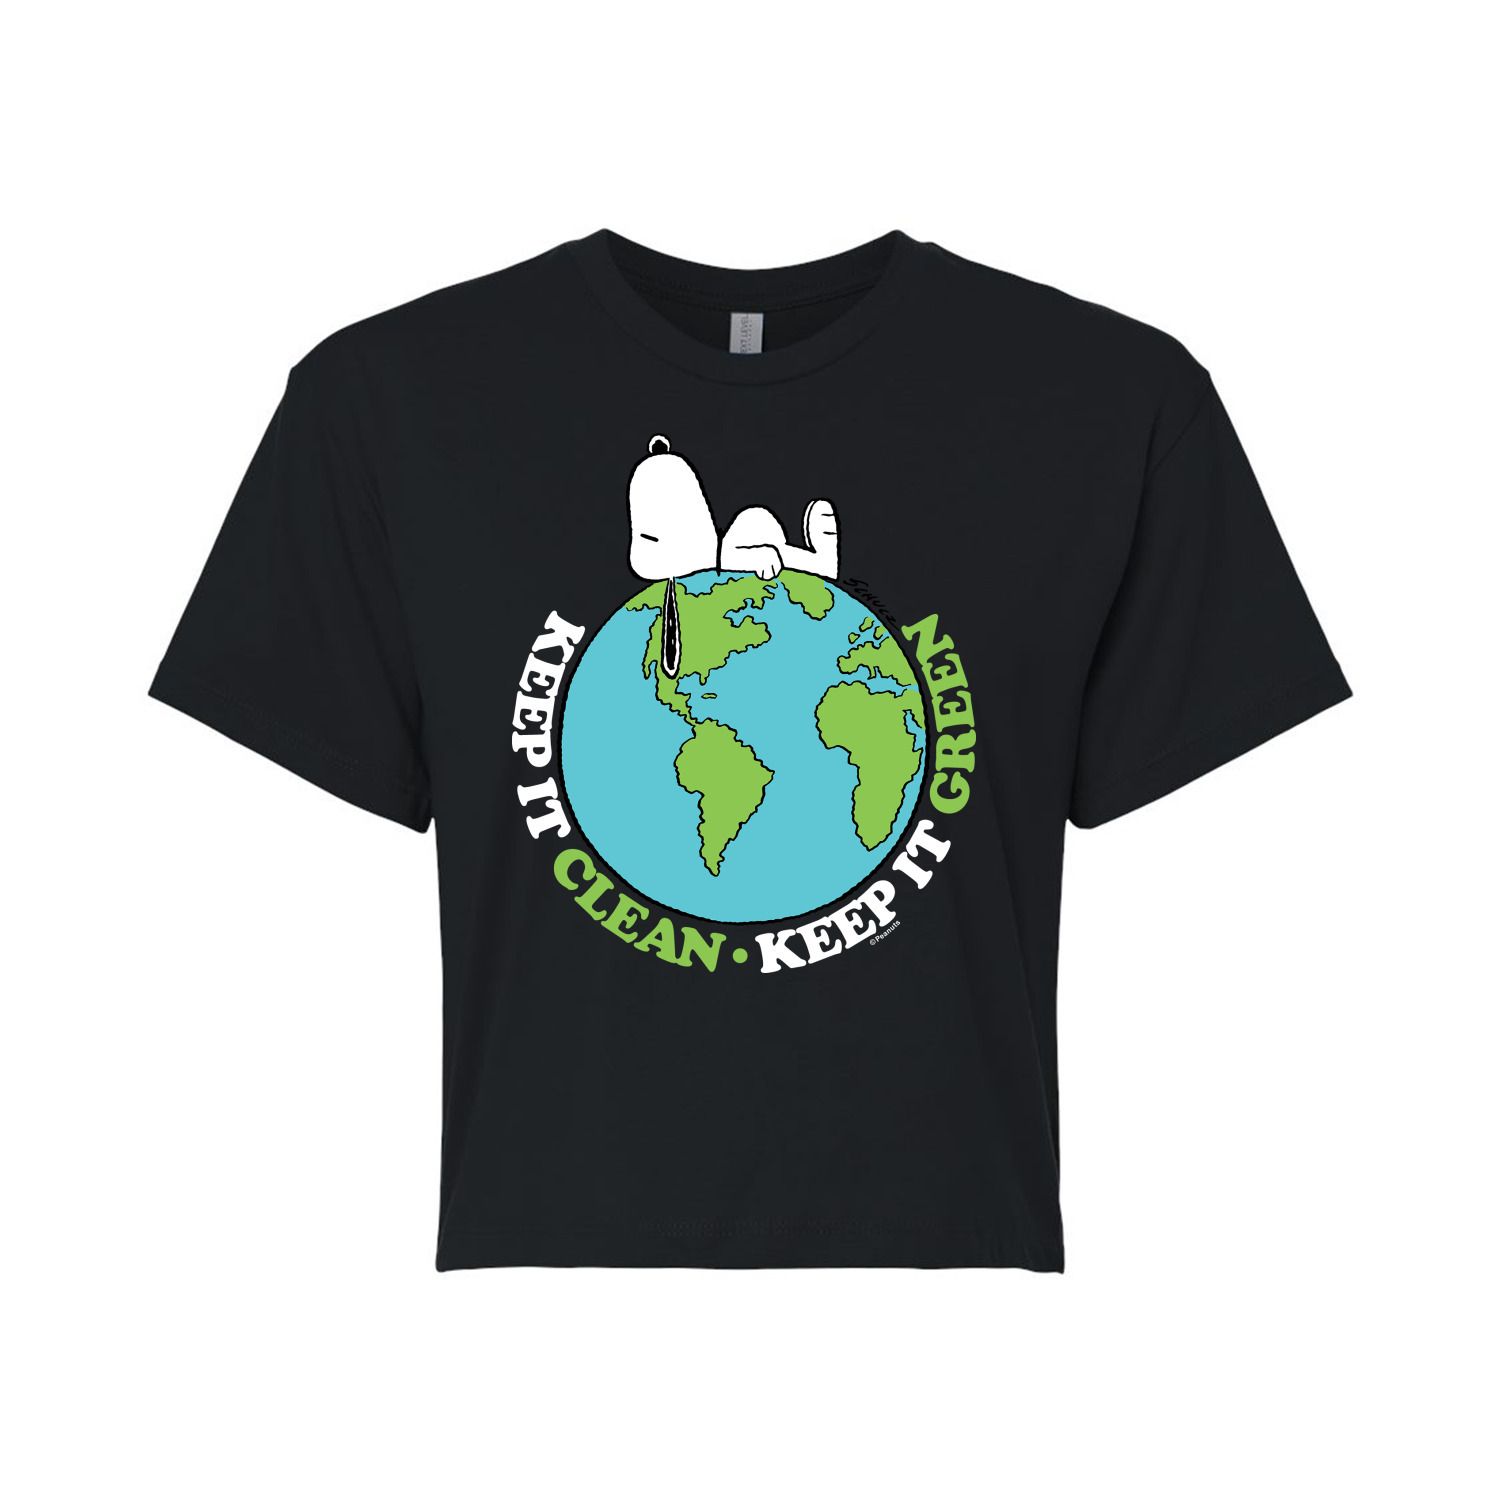 Укороченная футболка с надписью «Keep It Clean Keep It Green» для юниоров Peanuts Licensed Character